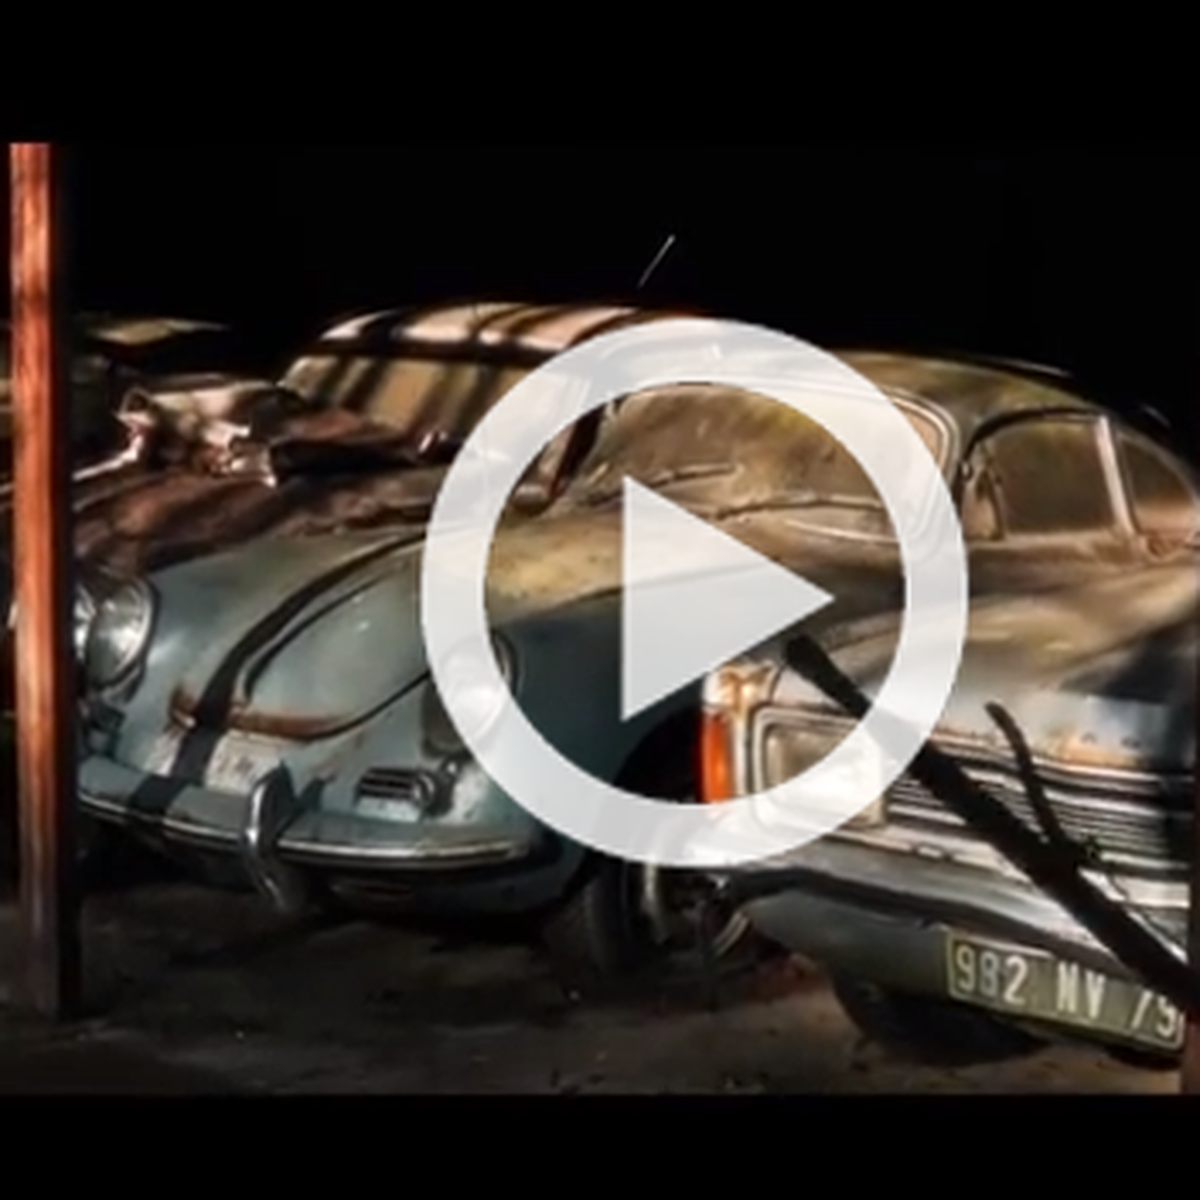 Descubre la curiosa historia de esta colección de coches abandonados